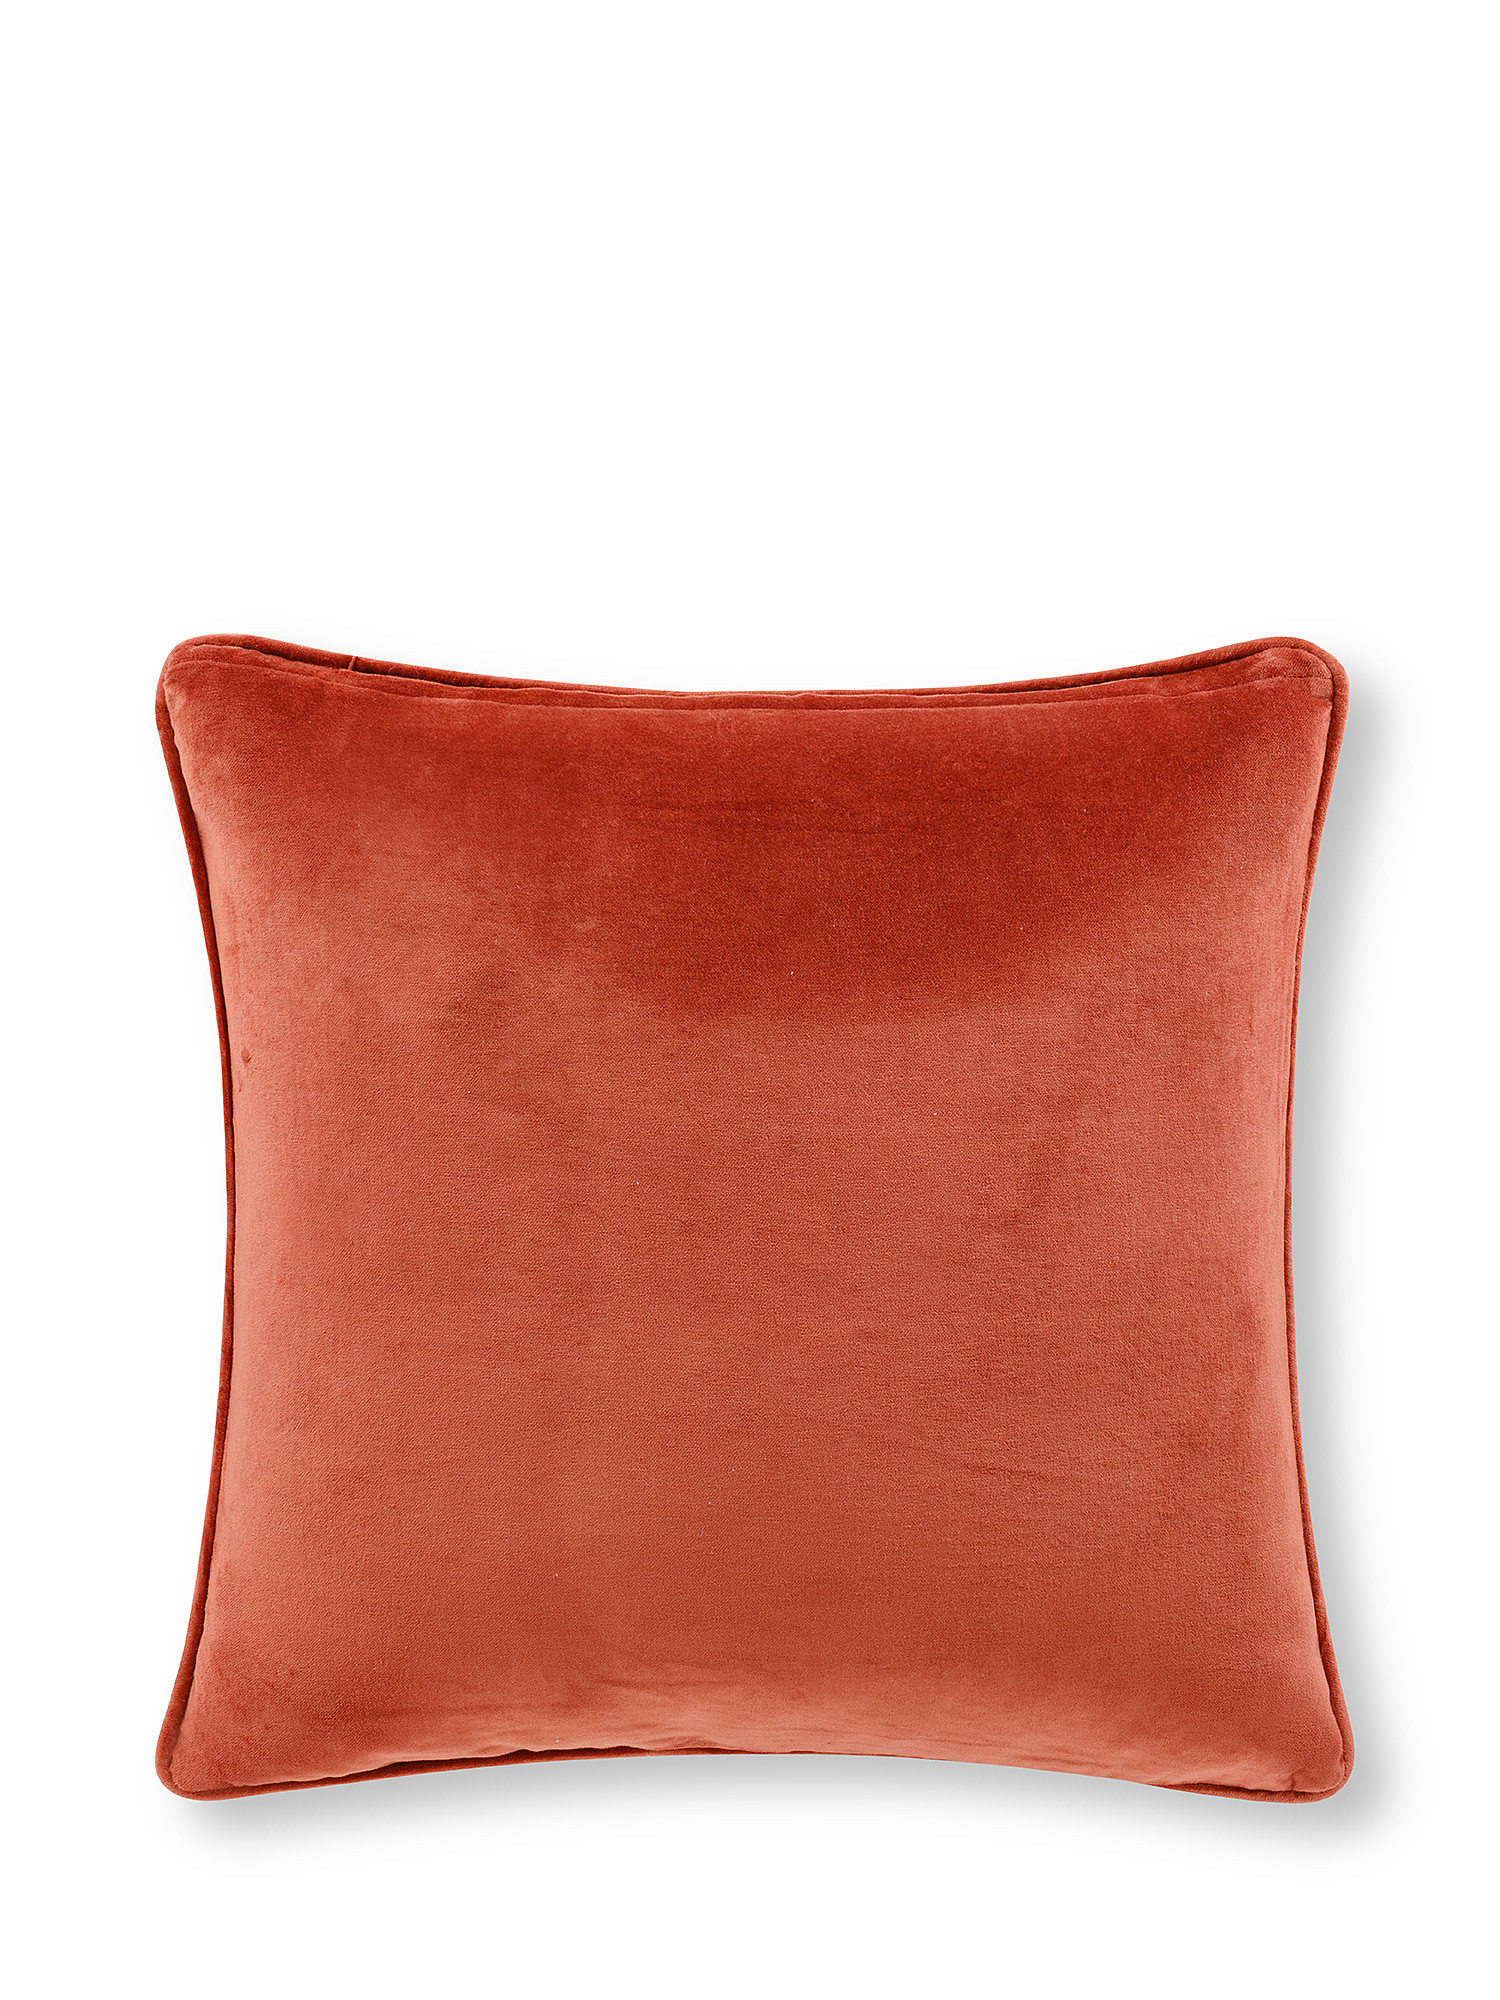 Plain velvet cushion 45x45cm, Brown, large image number 1